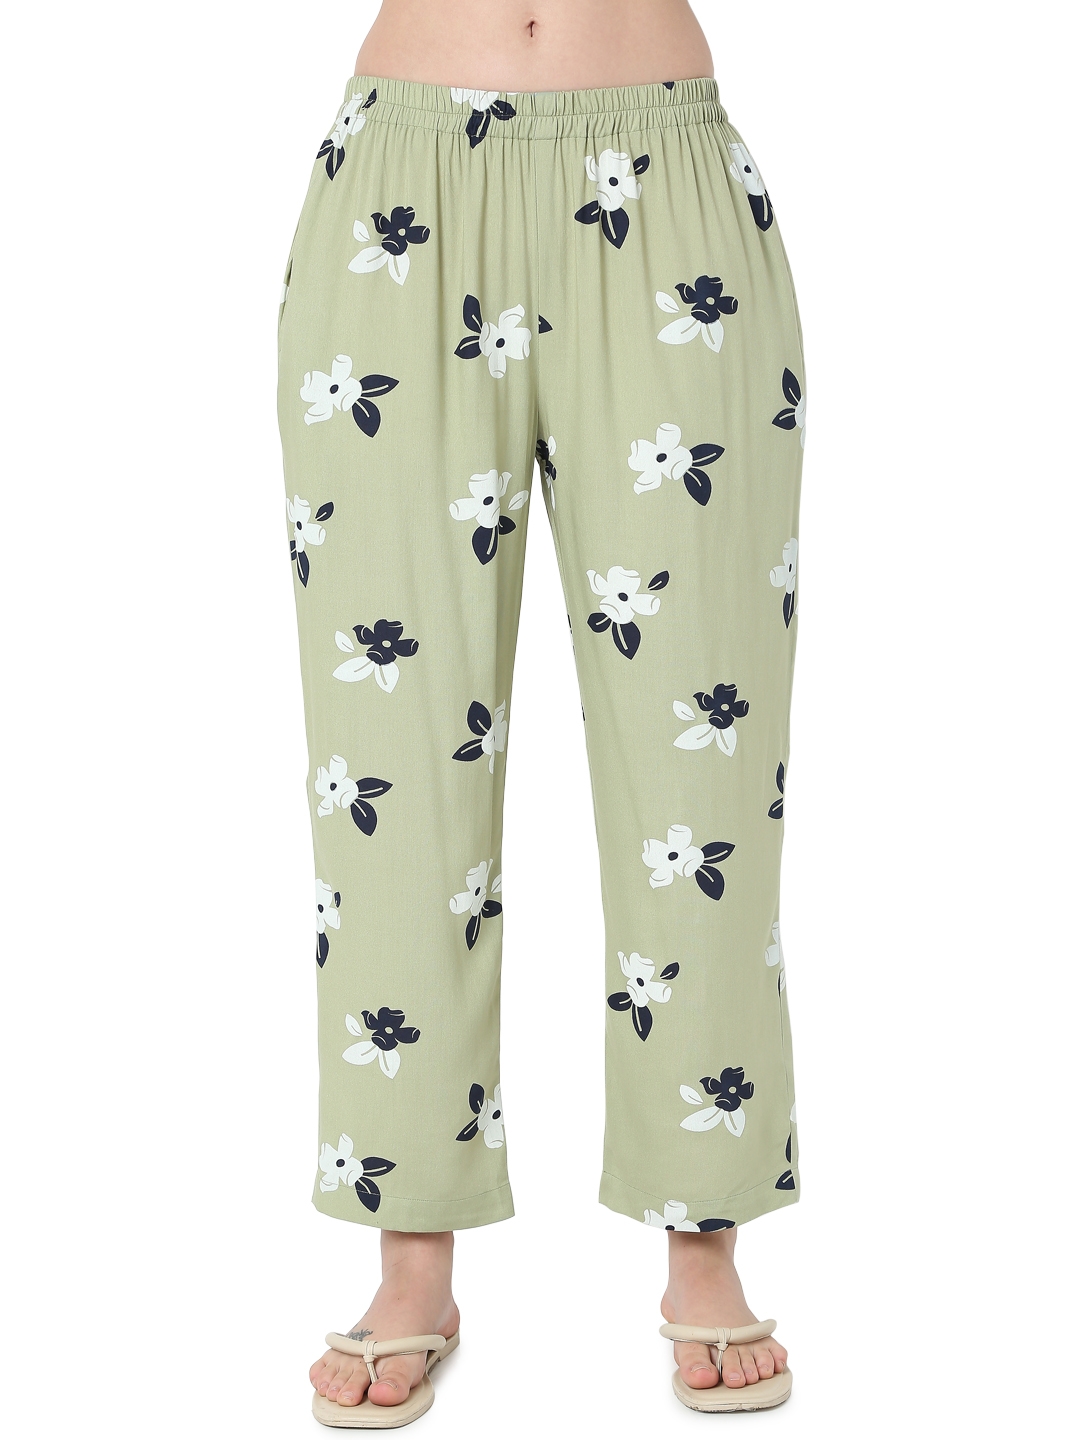 Smarty Pants | Smarty Pants women's cotton olive floral print night suit.  4